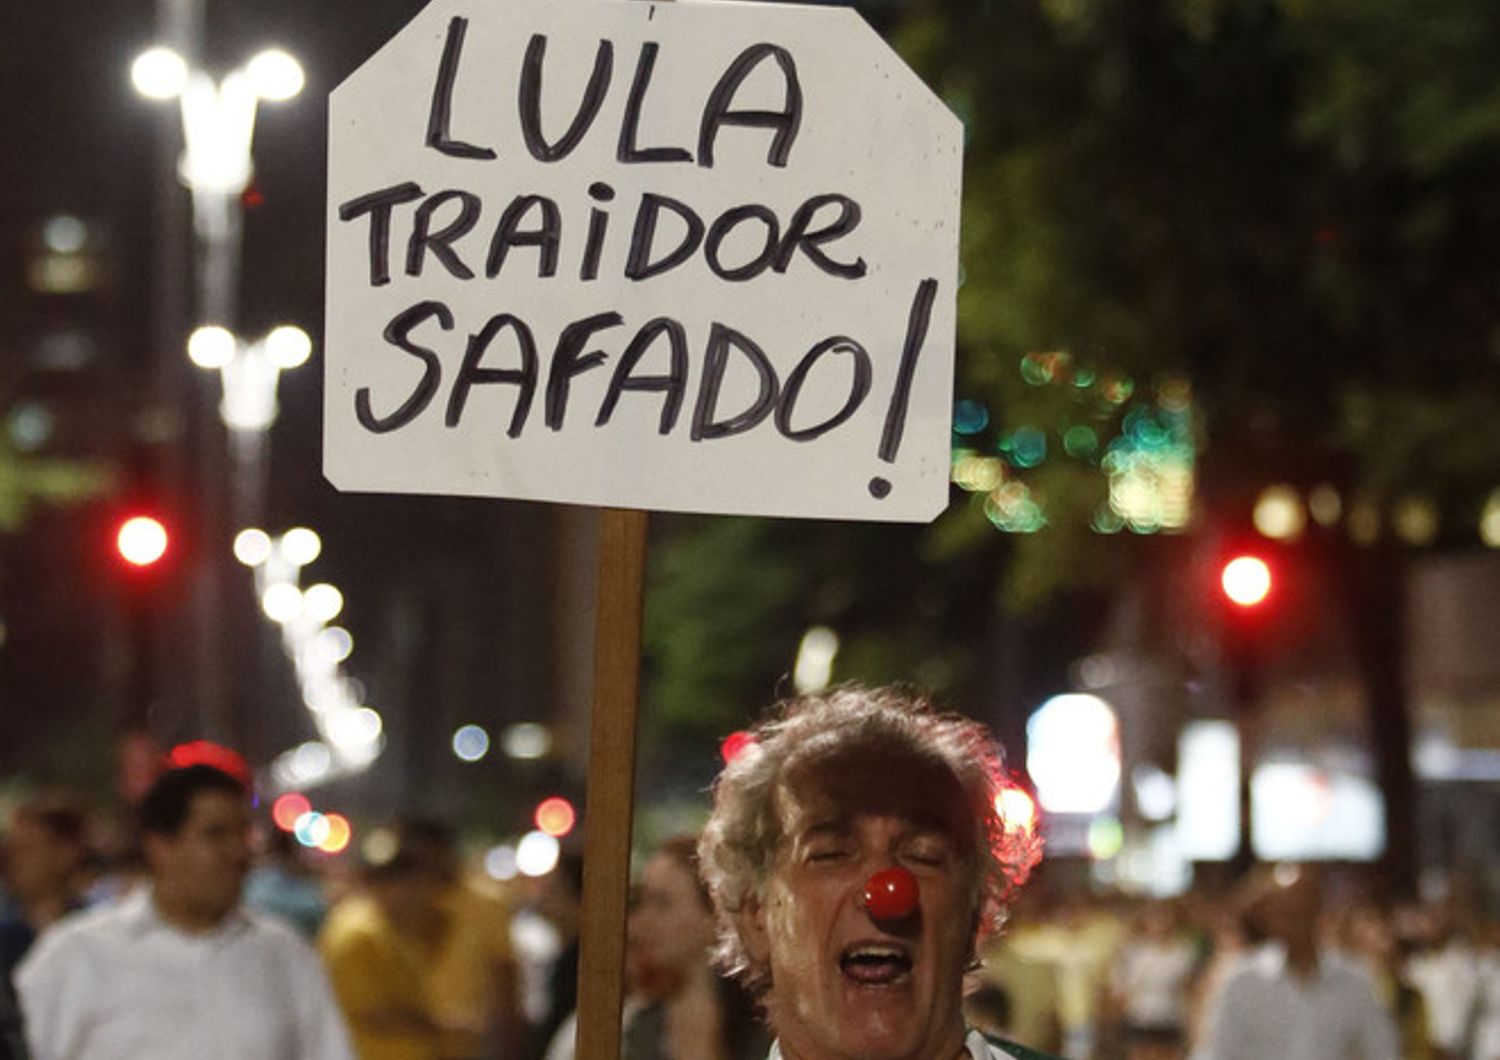 Brasile, proteste in piazza dopo  nomina Lula al governo per evitare l'arresto (Afp)&nbsp;